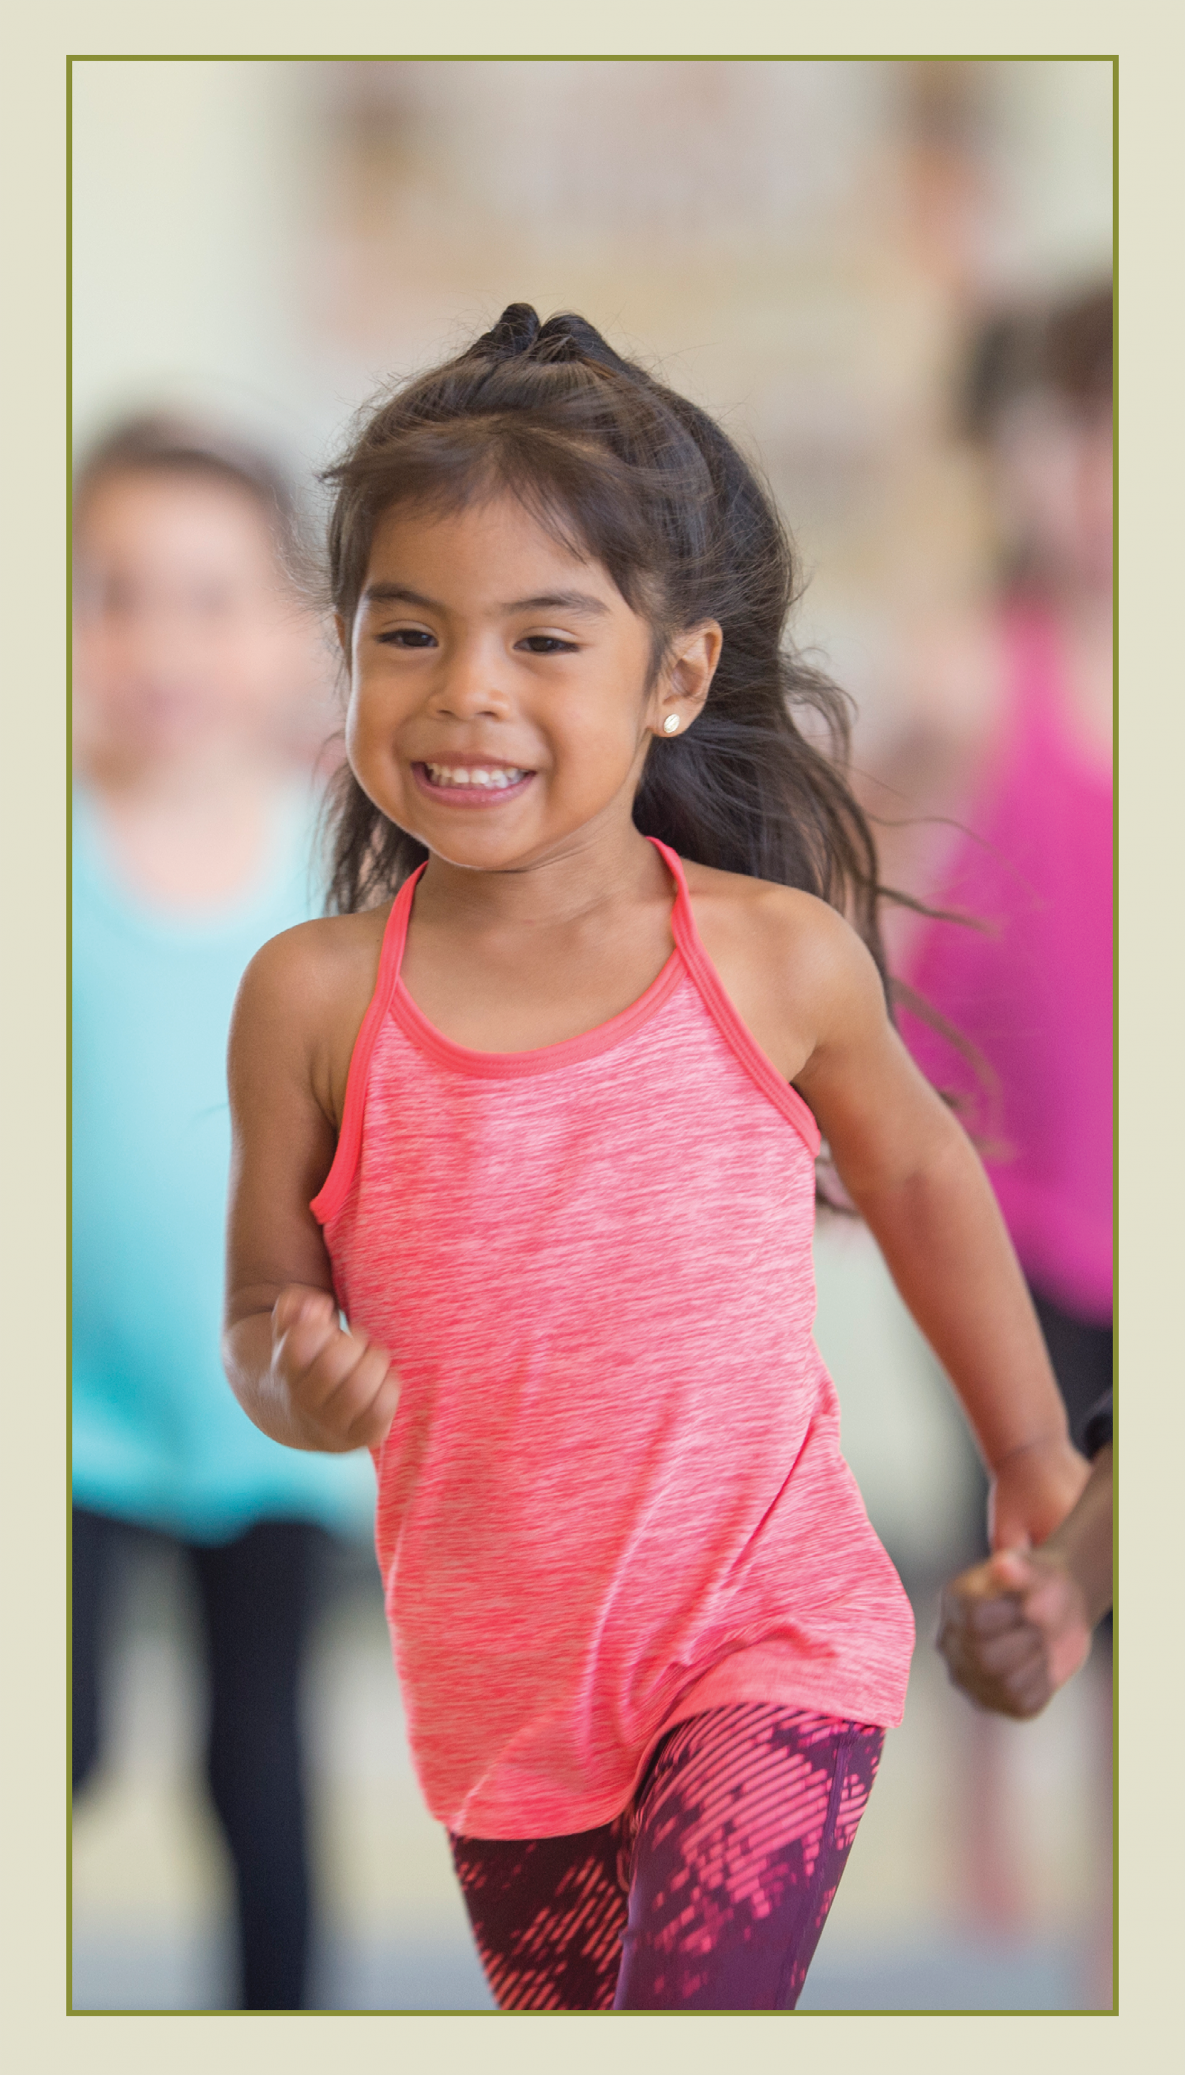 A smiling, little girl running. 